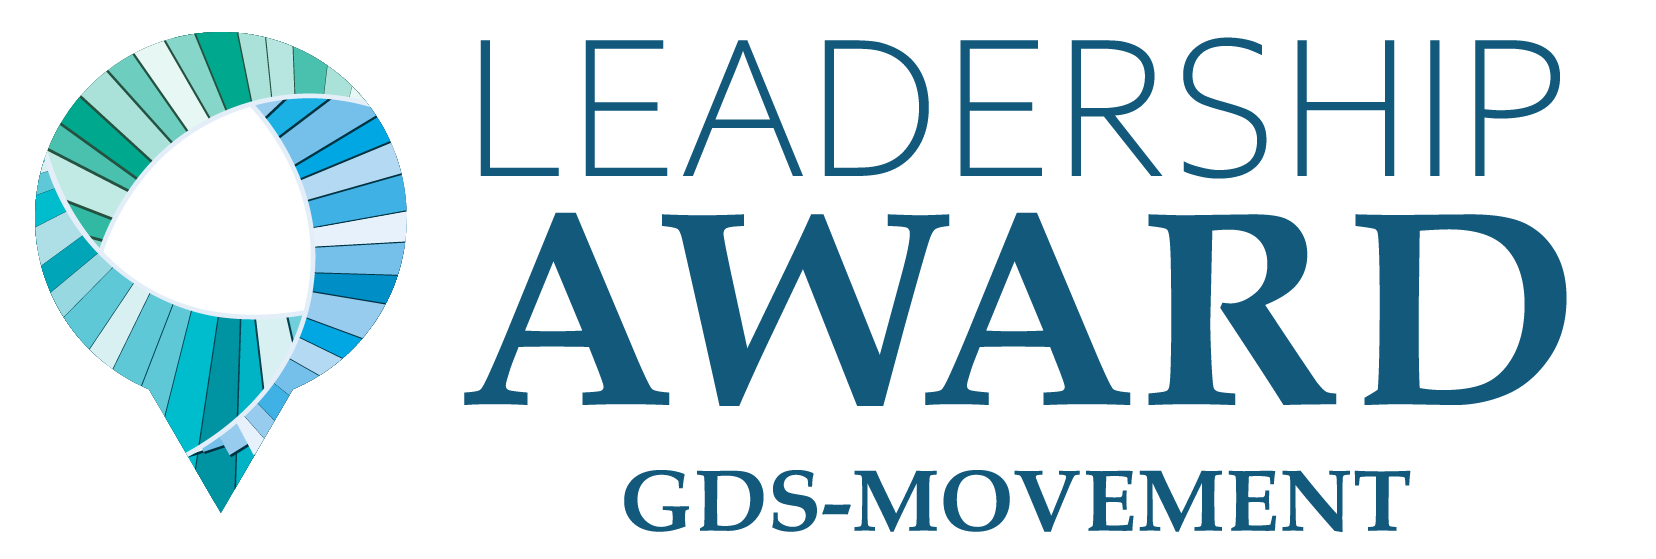 Logo for GDS-Movement Leadership Award in landscape size